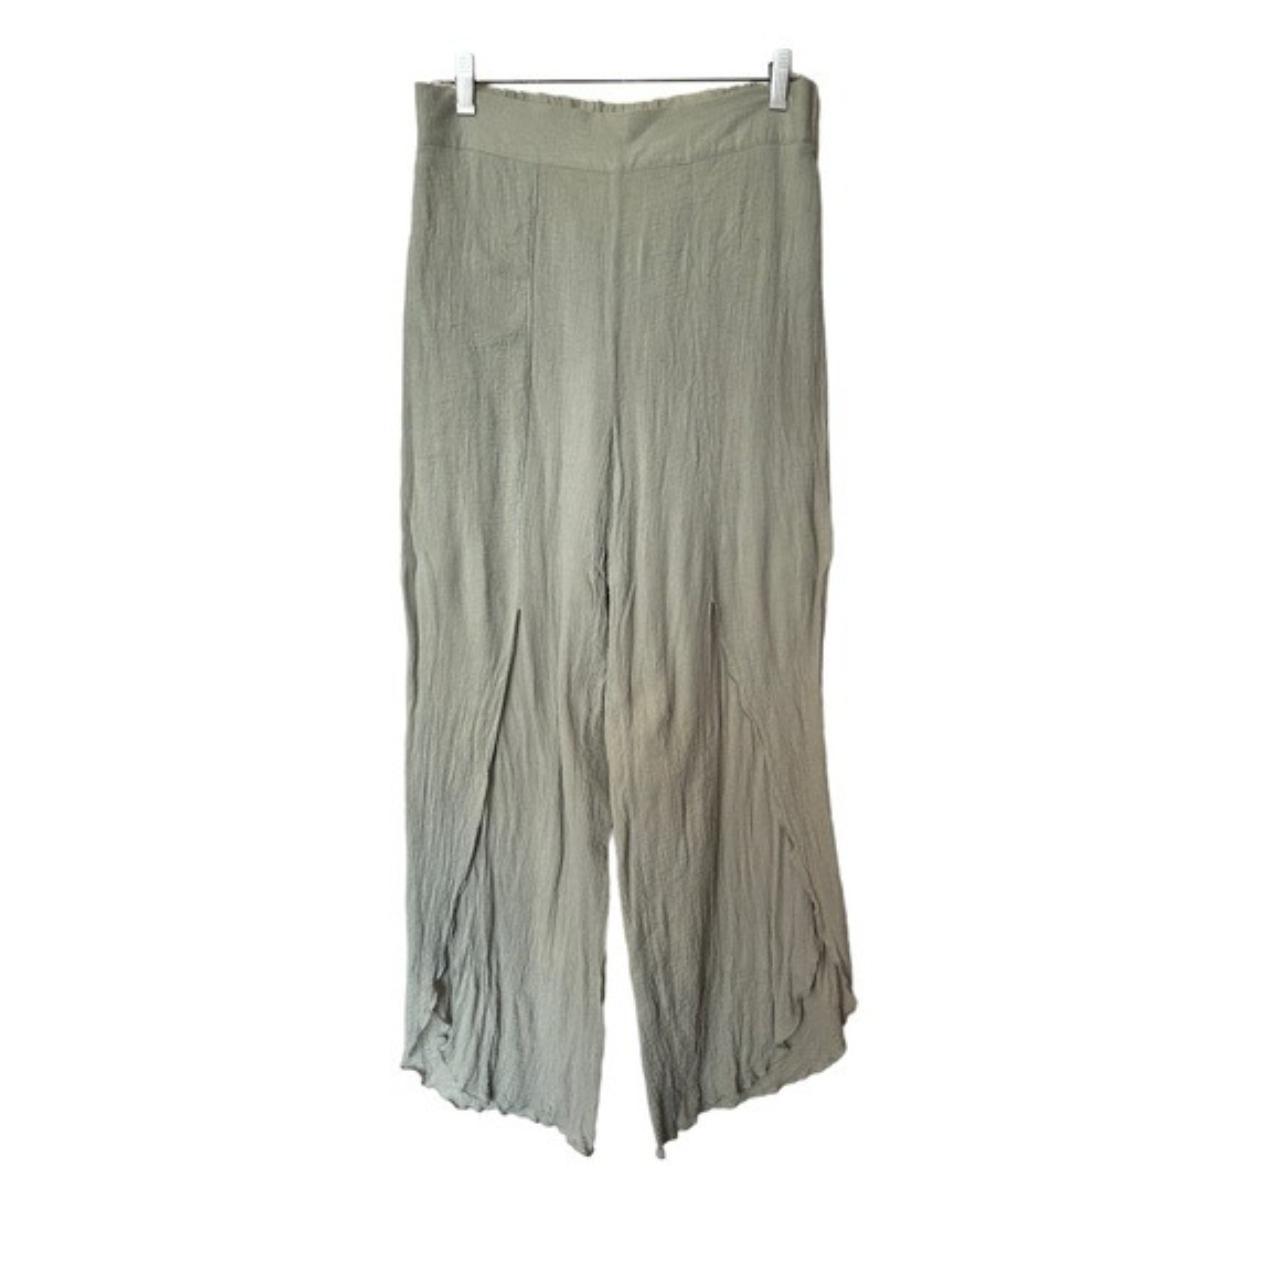 Soft Surroundings Linen Gauze Style Flyaway Pants - Depop